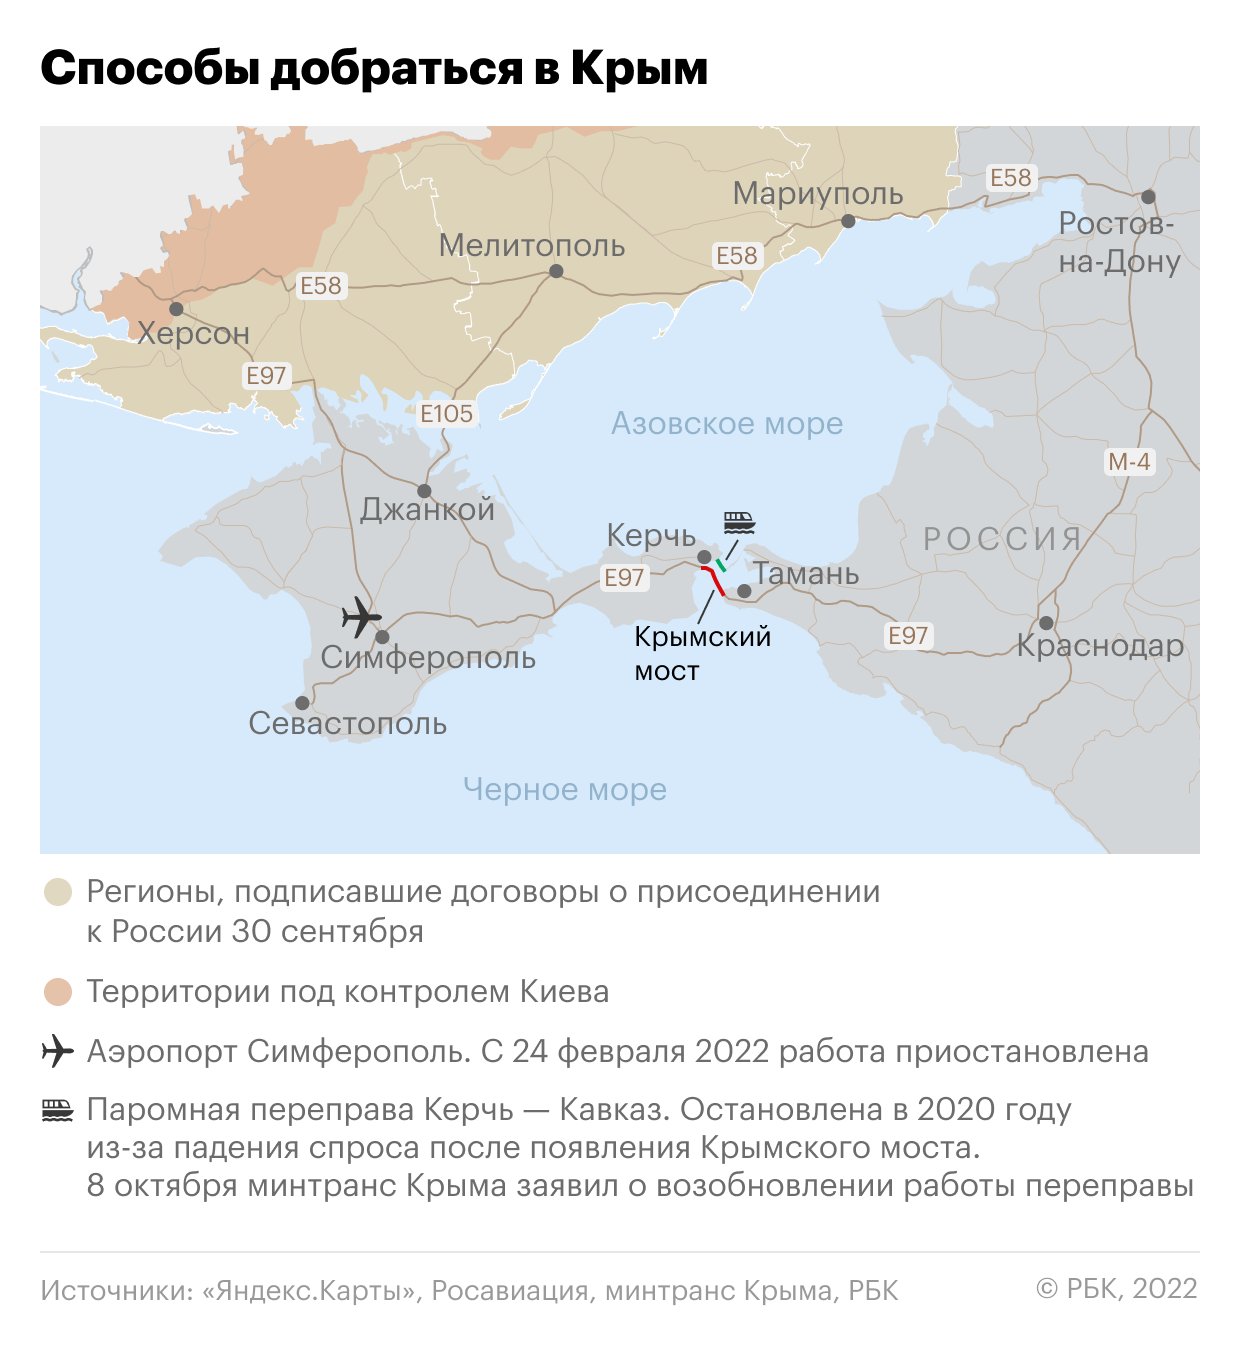 Транспортные маршруты в Крым. Карта